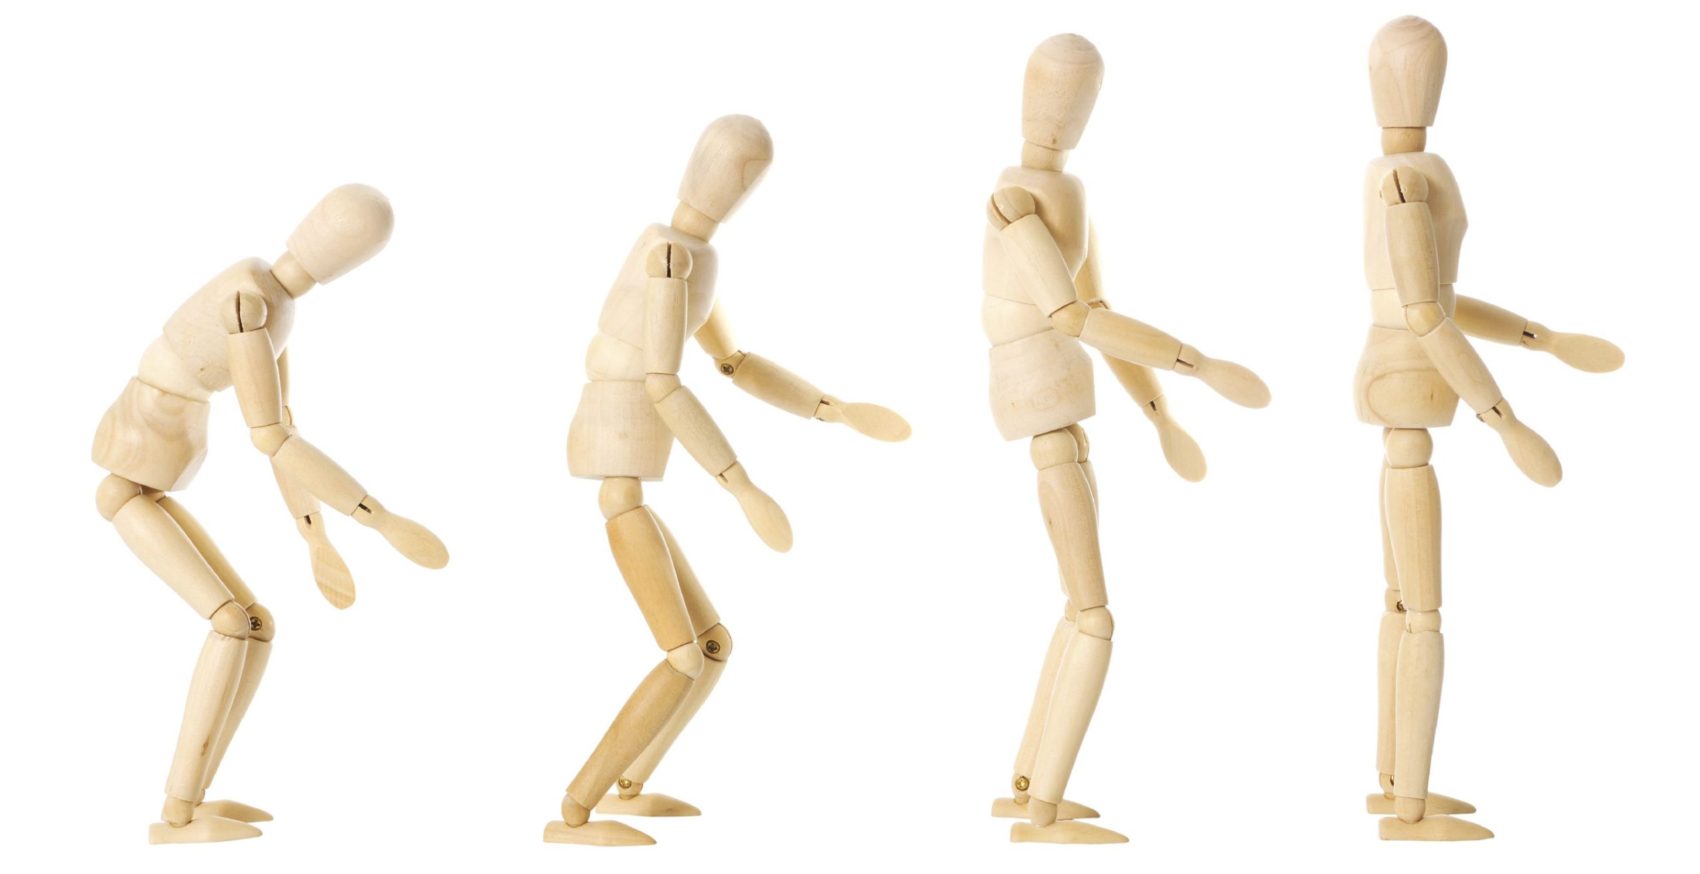 Posture-Bruch Takedown Holzmännchen modell